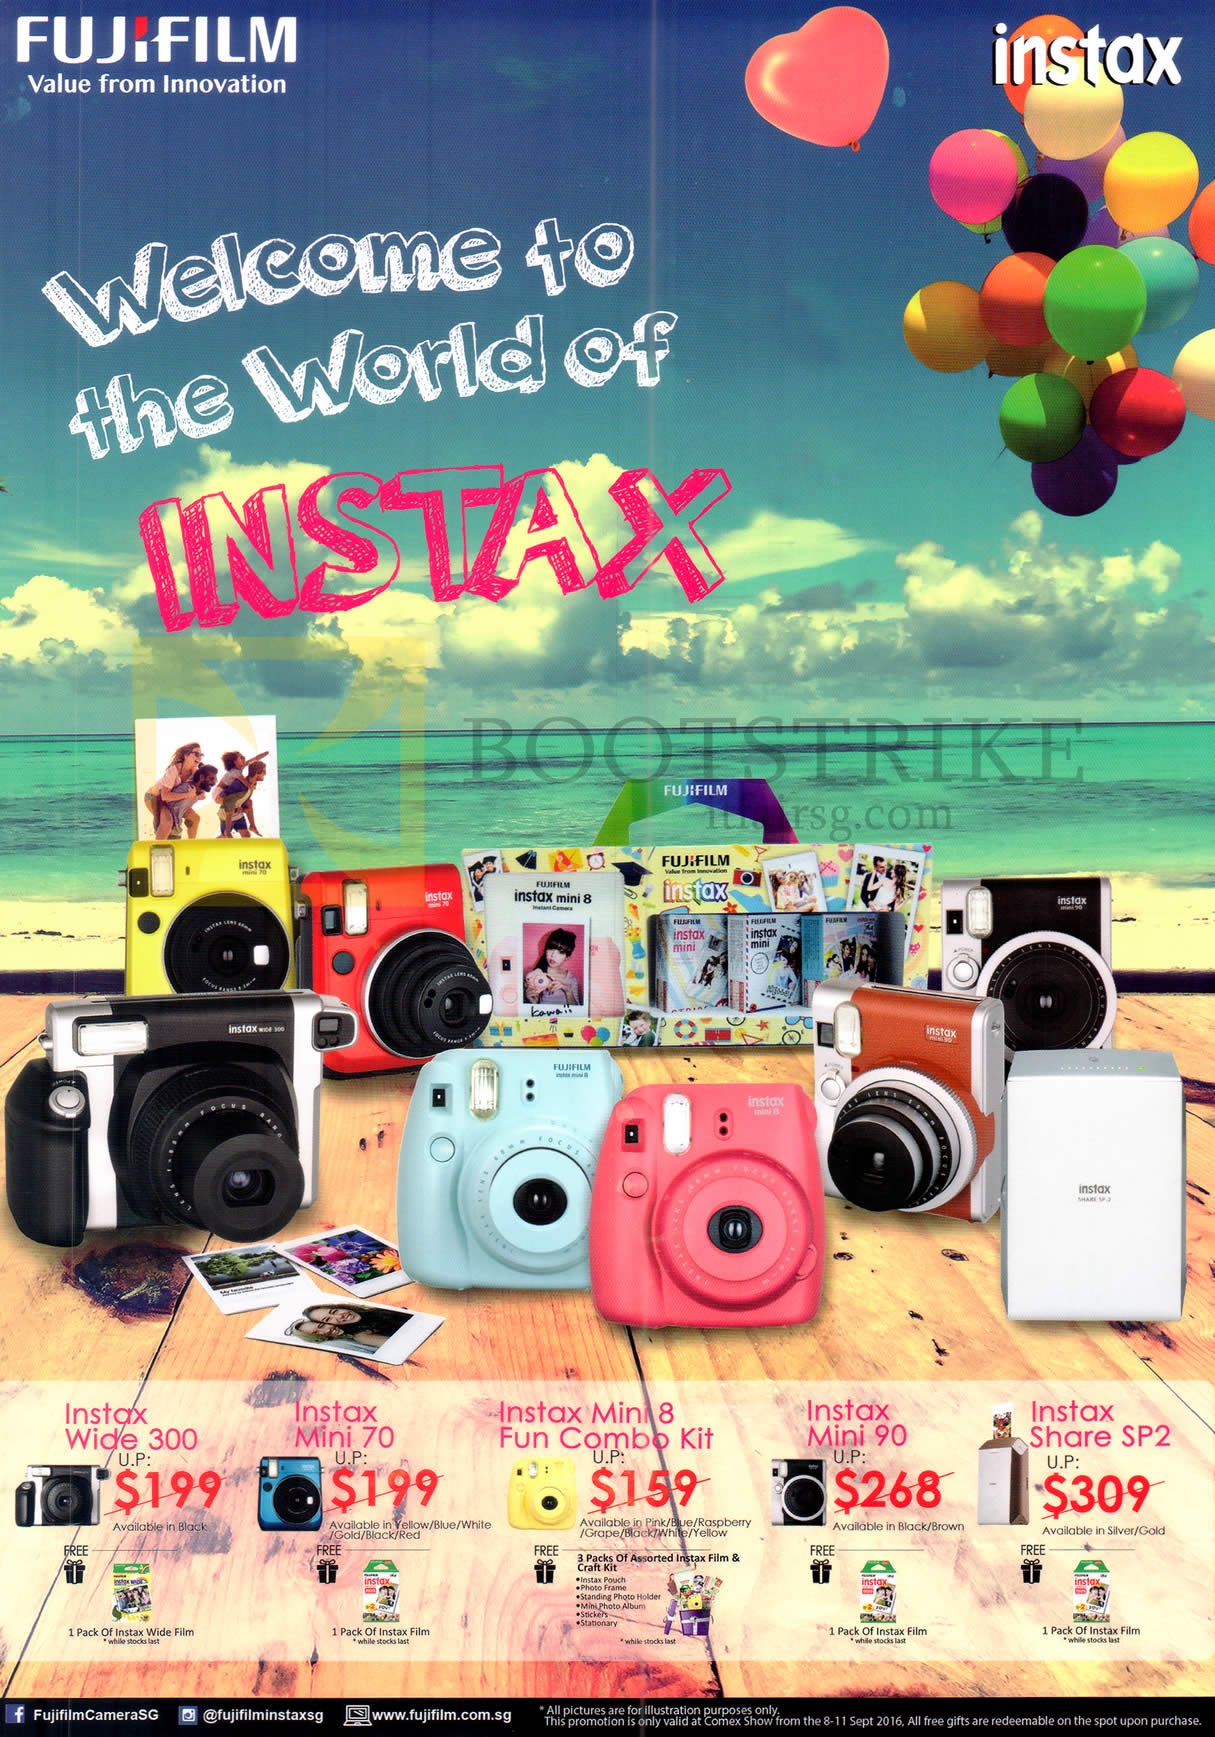 COMEX 2016 price list image brochure of Fujifilm Digital Camera Instax Accessories Wide 300, Mini 70, Mini 8 Fun Combo Kit, Mini 90, Share SP2